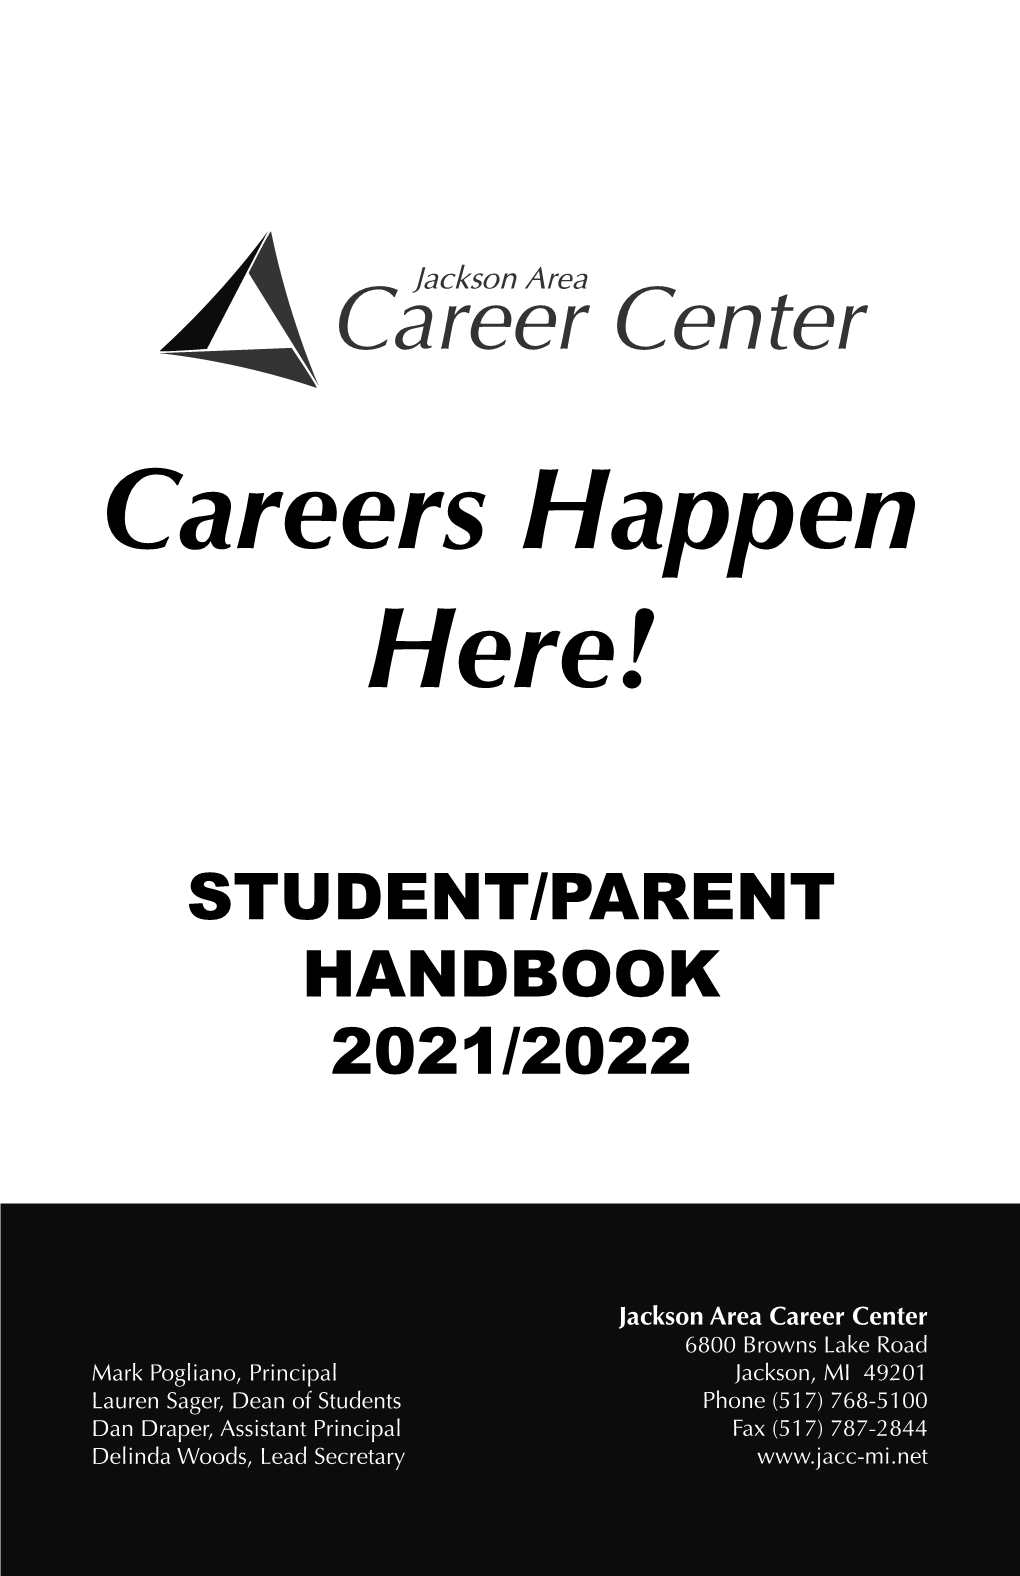 Student/Parent Handbook 2021/2022